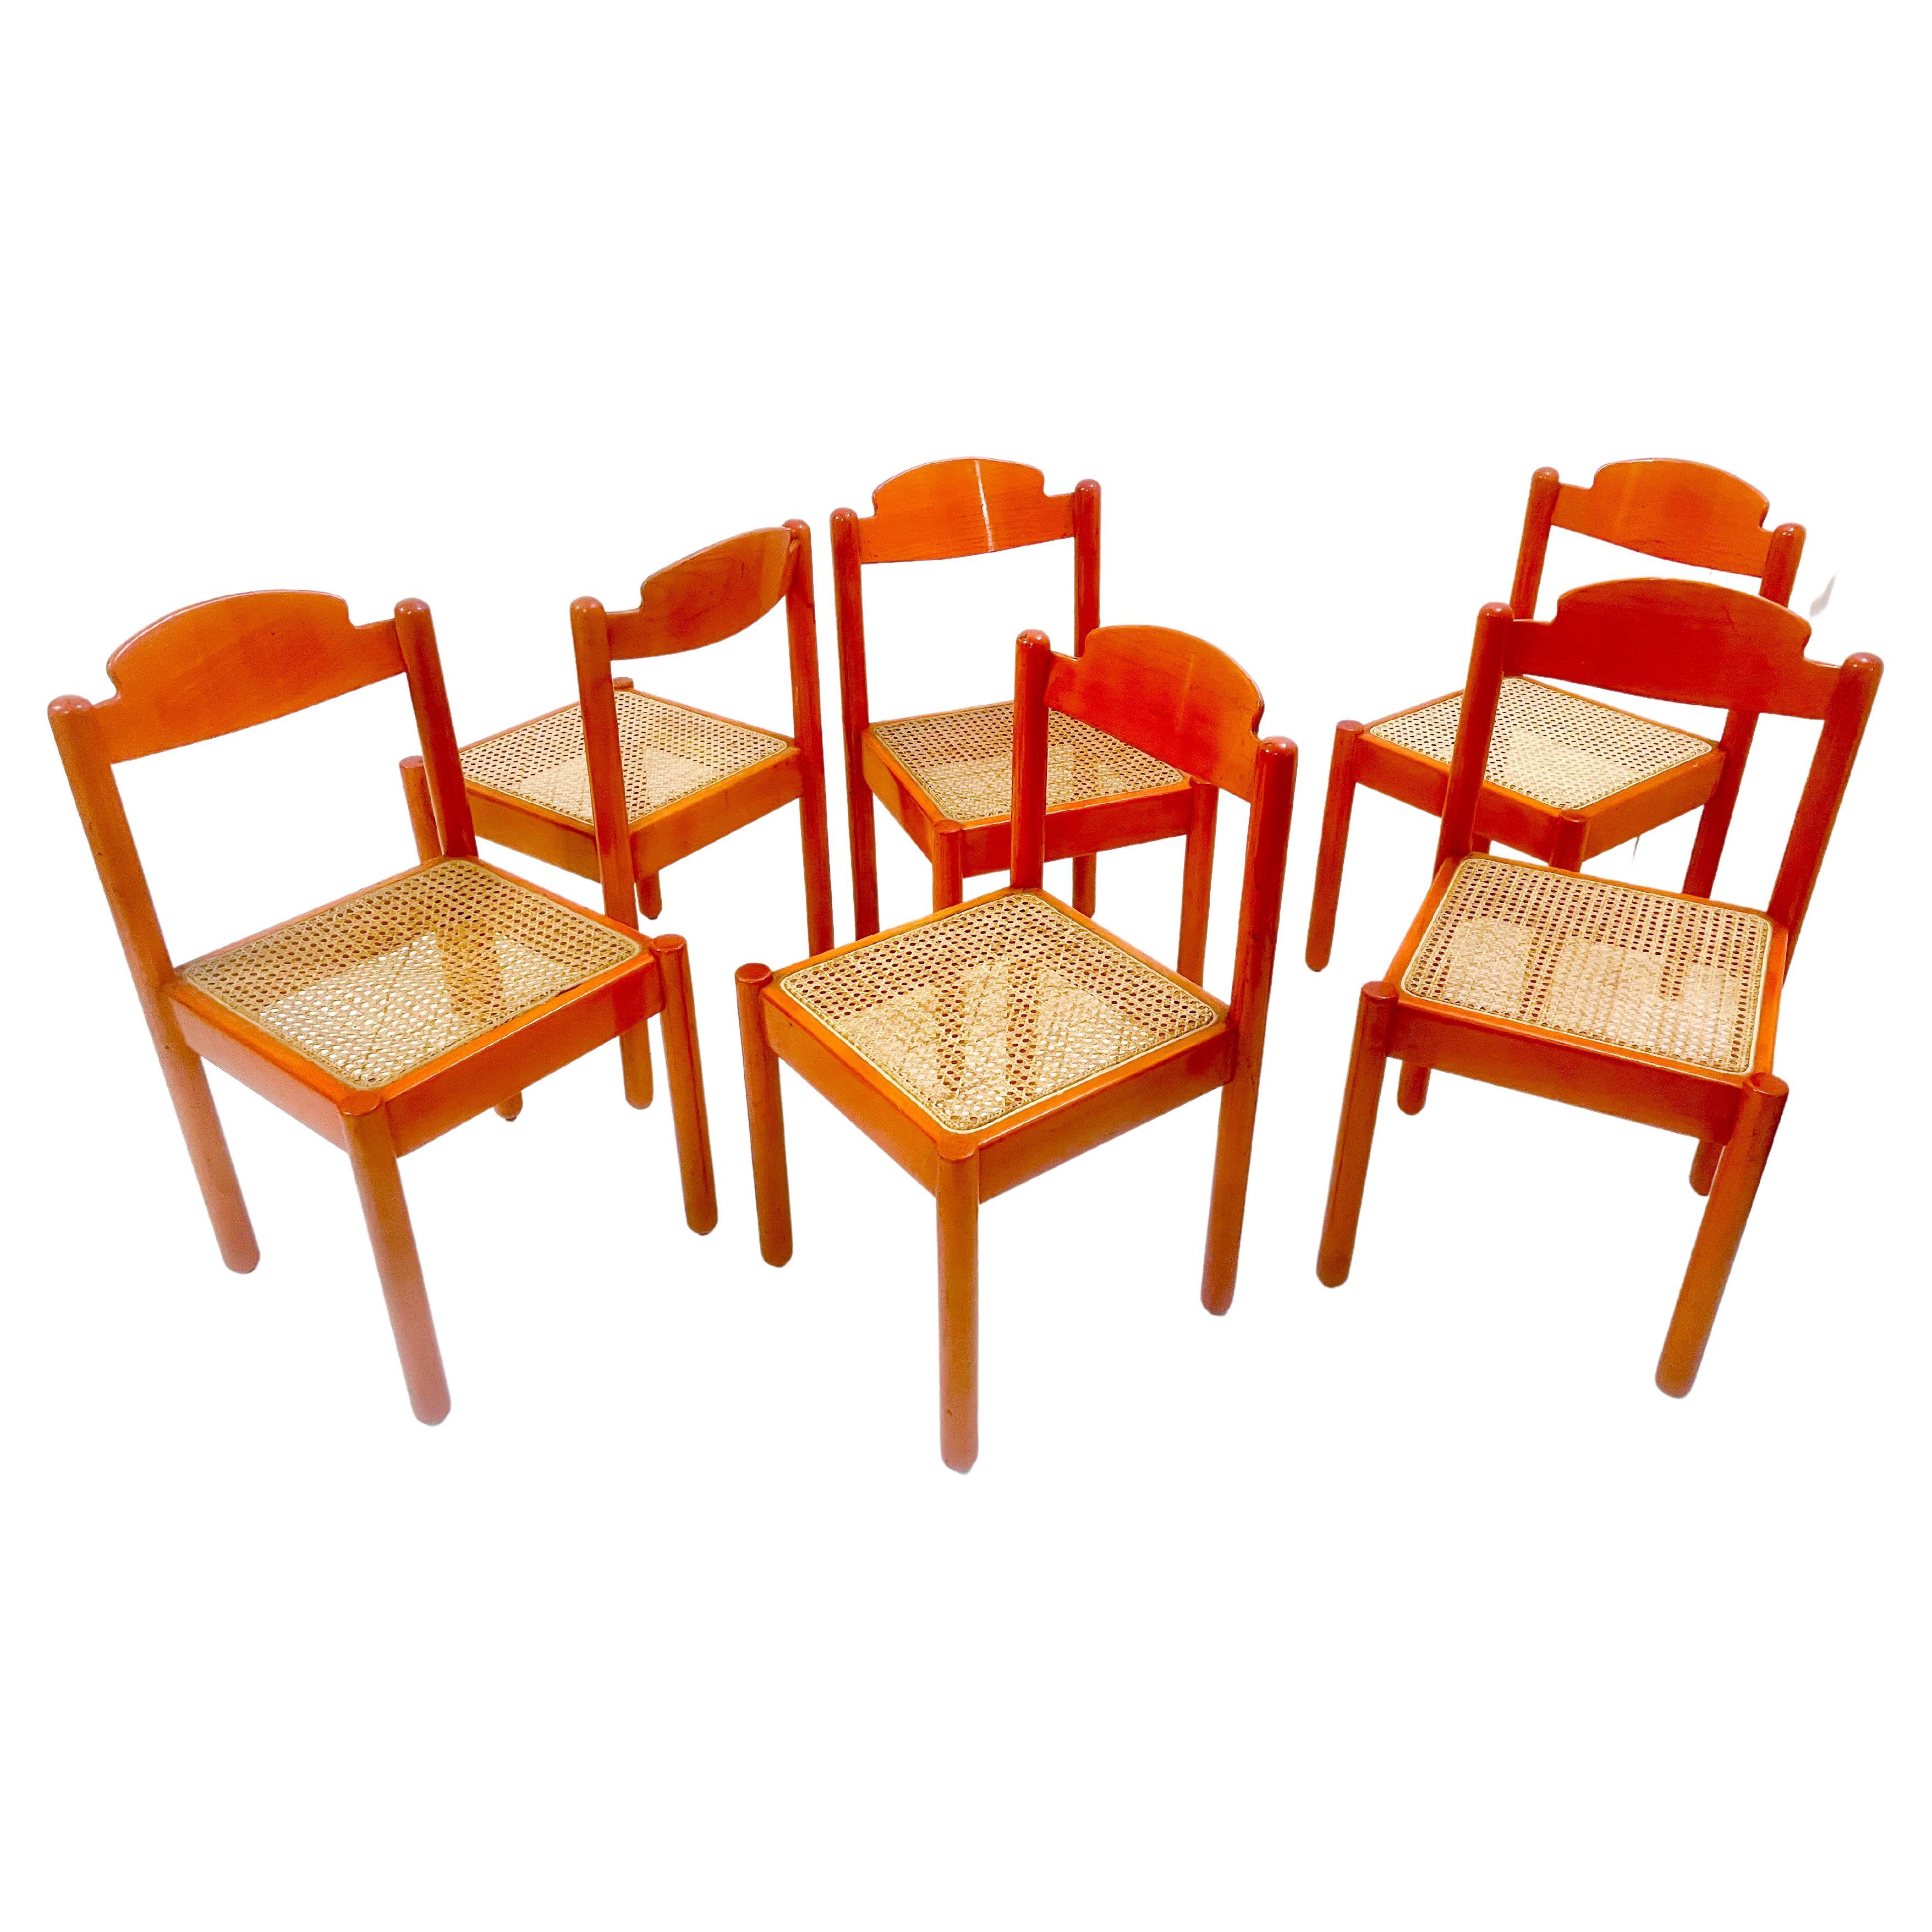 Mid-Century Modern Set of 6 Orange Chairs, Wood, Italy, 1960s